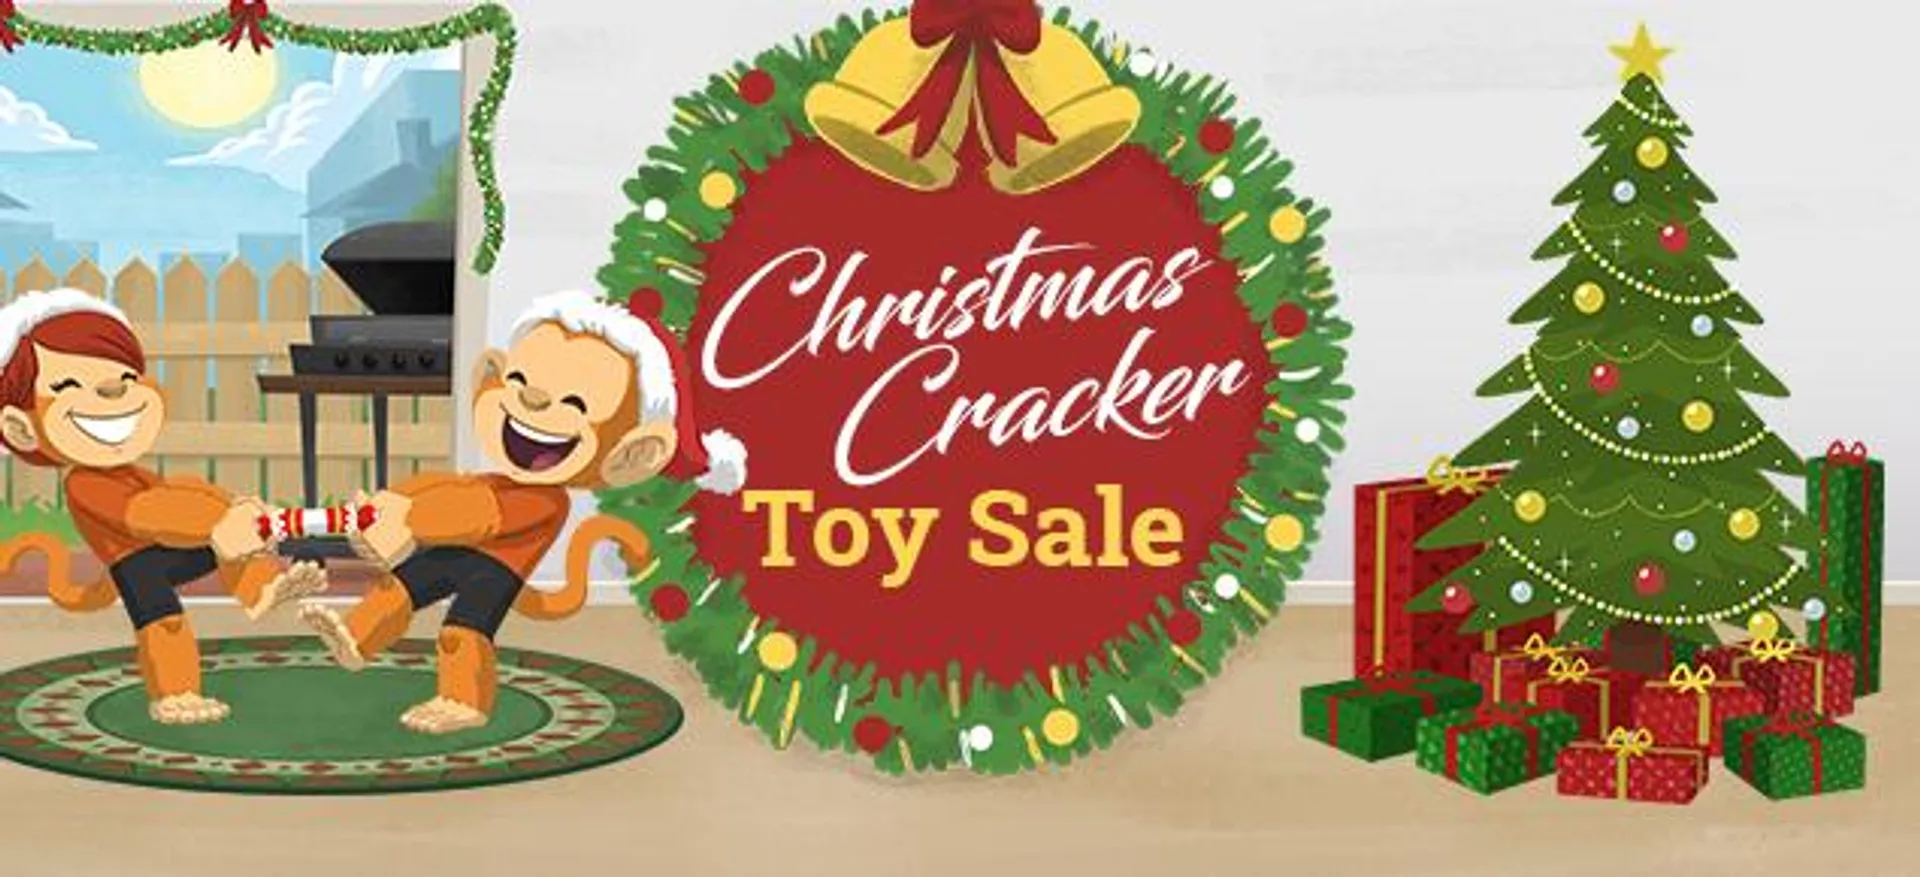 Christmas Cracker - Toy Deals!